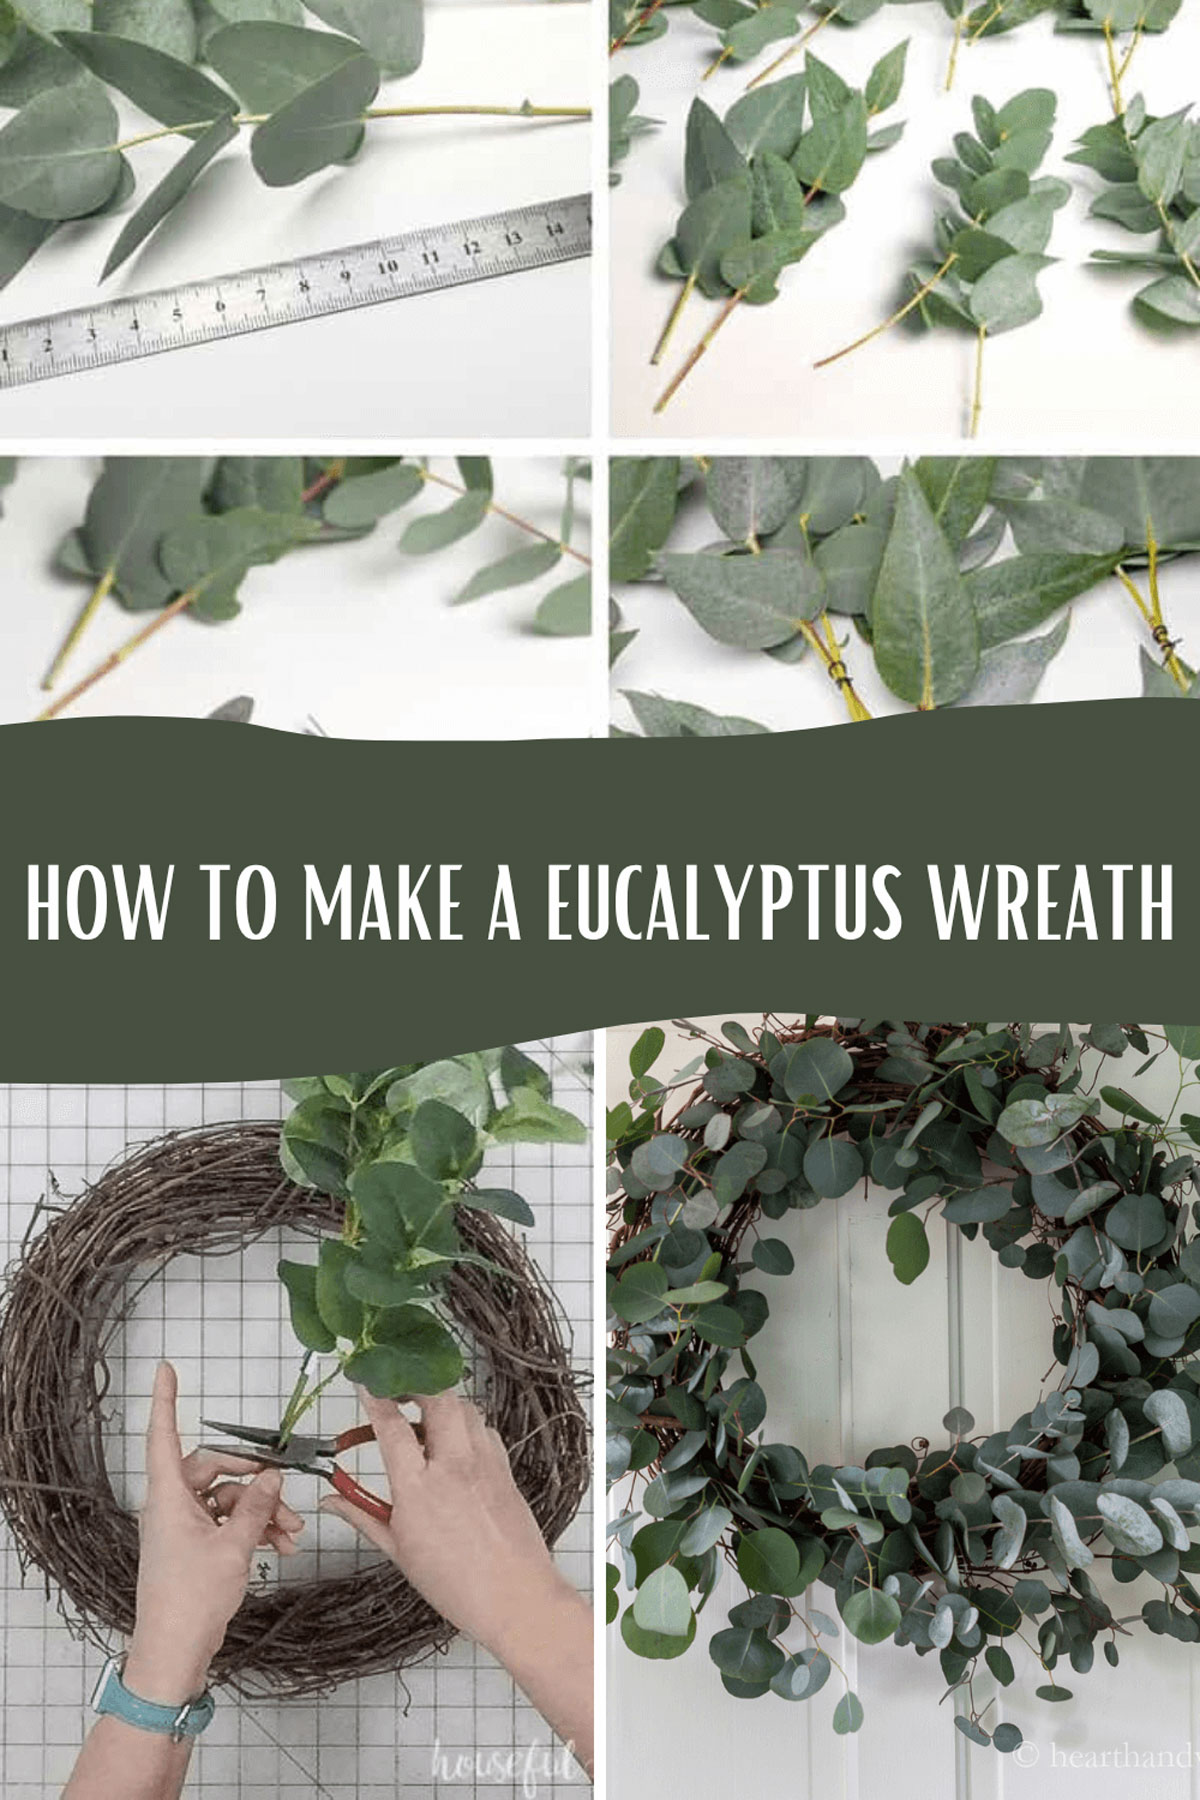 How to make a Eucalyptus wreath